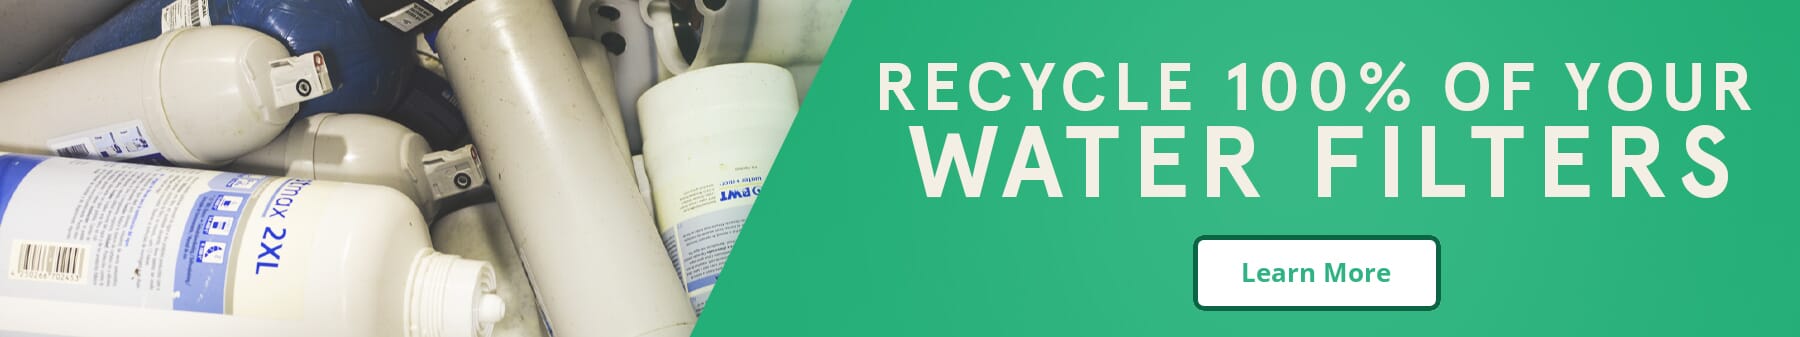 Water Filter Recycling Scheme